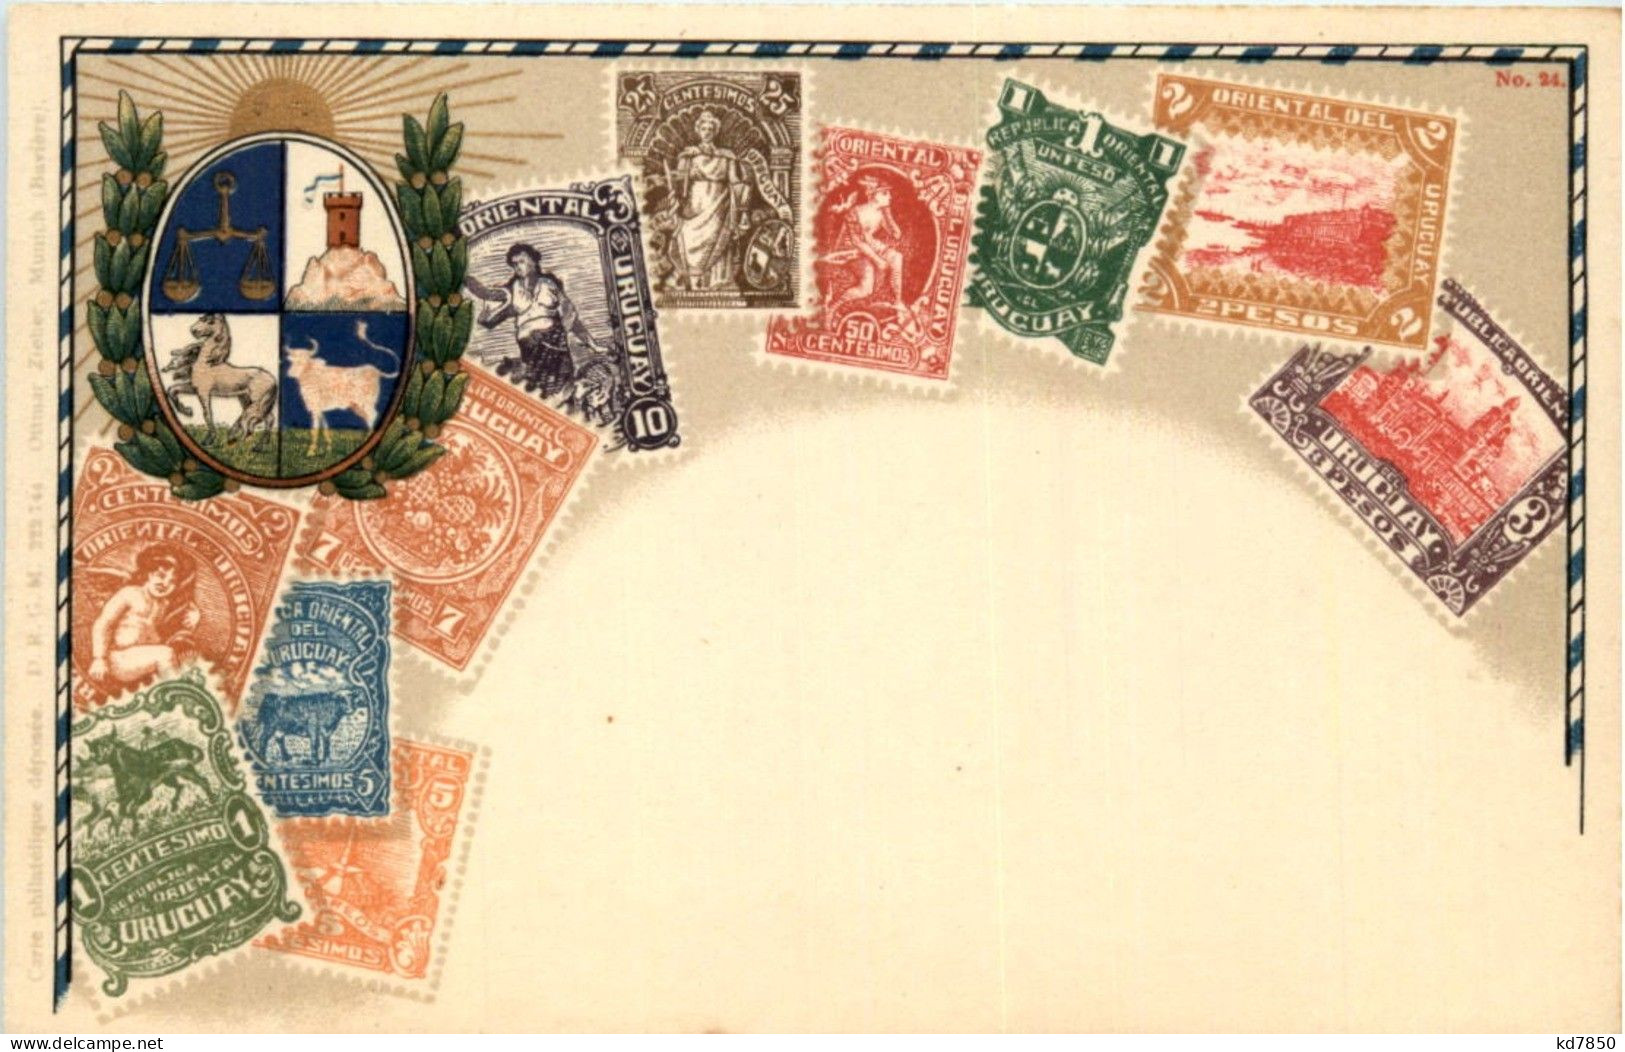 Uruquay - Briefmarken - Litho - Timbres (représentations)